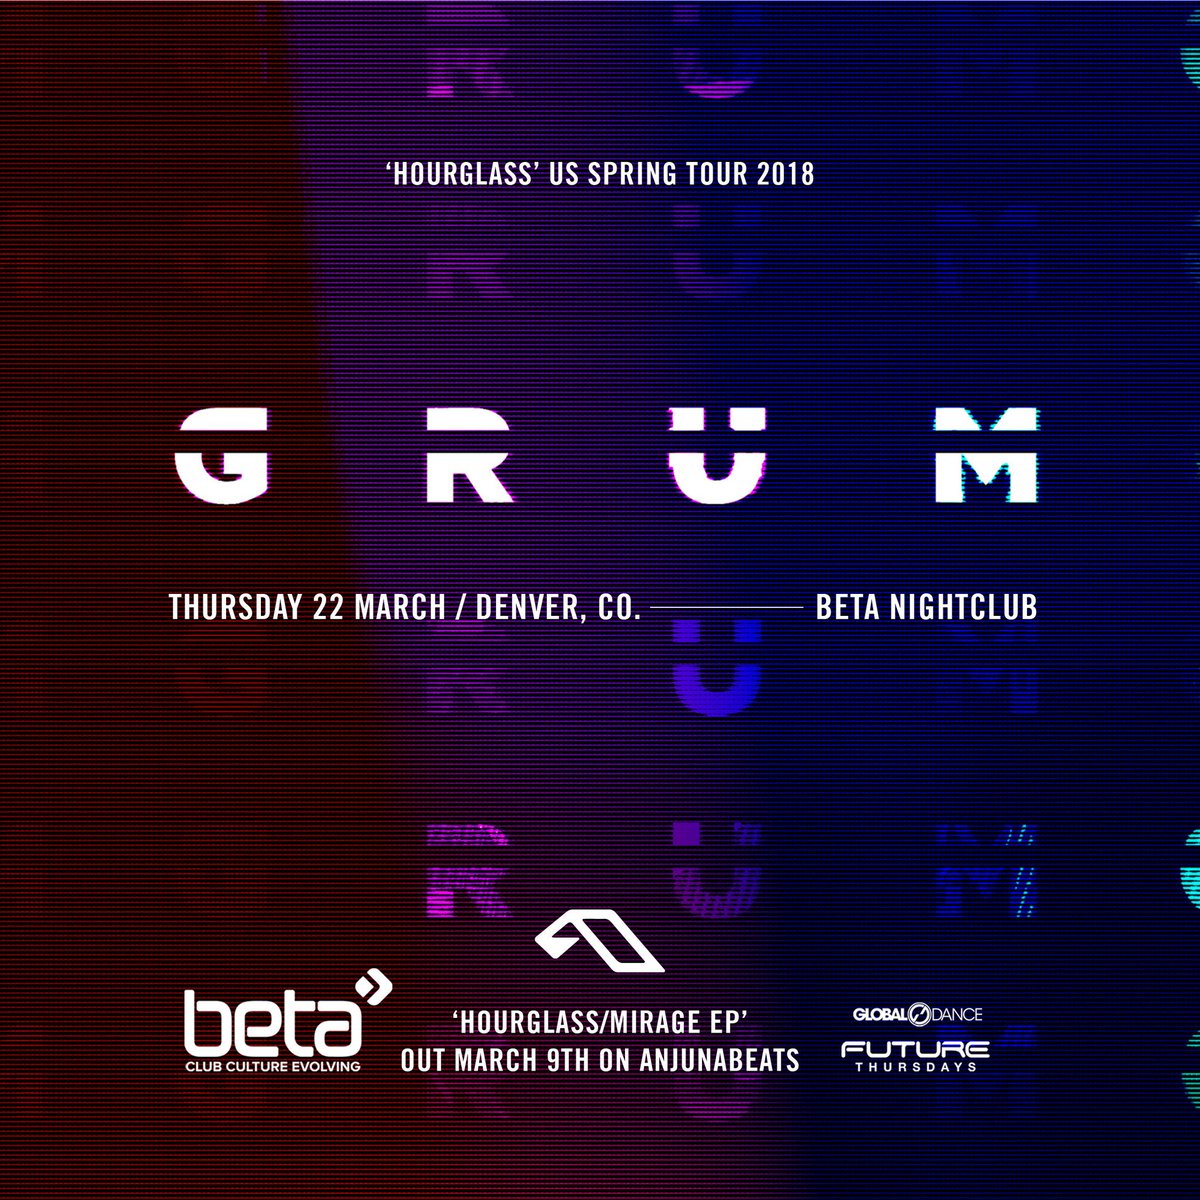 💥 JUST ANNOUNCED 💥
@grummmusic stops by @BetaNightclub for #FutureThursdays on March 22nd!

Tix on sale now: bit.ly/GrumBeta